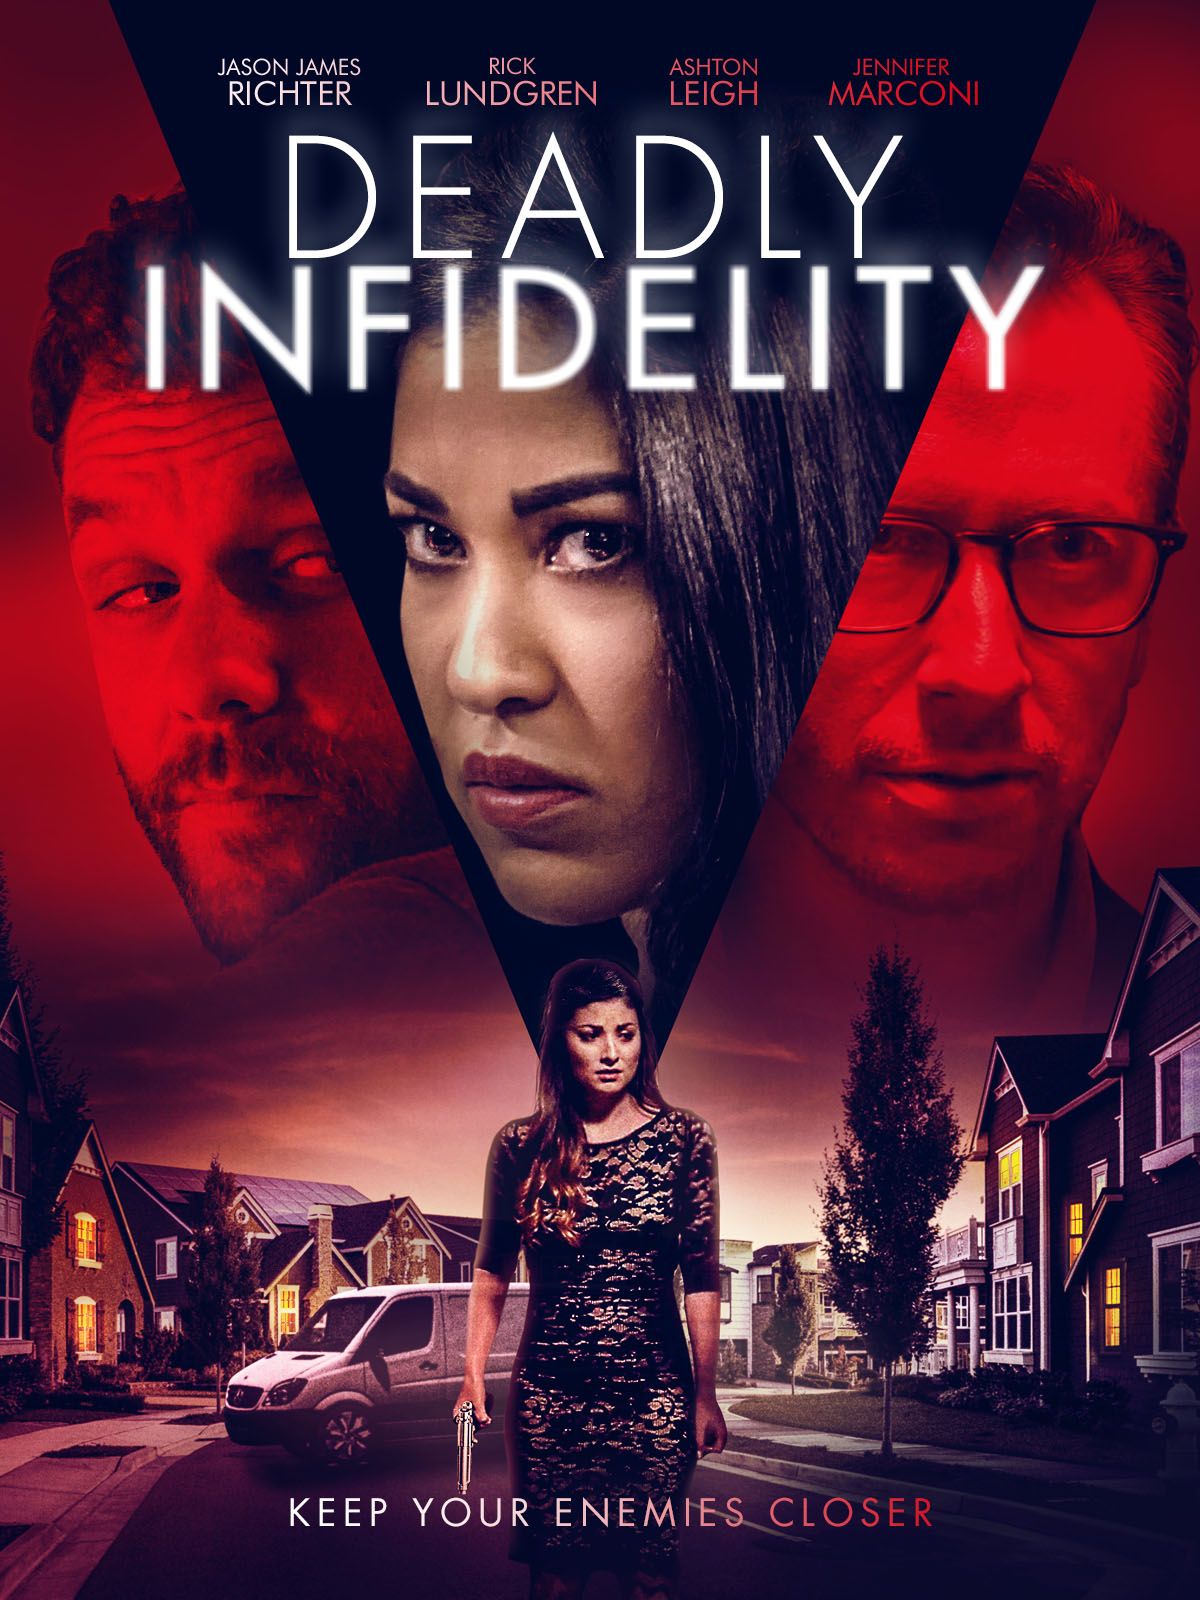 Keyart for the movie Deadly Infidelity